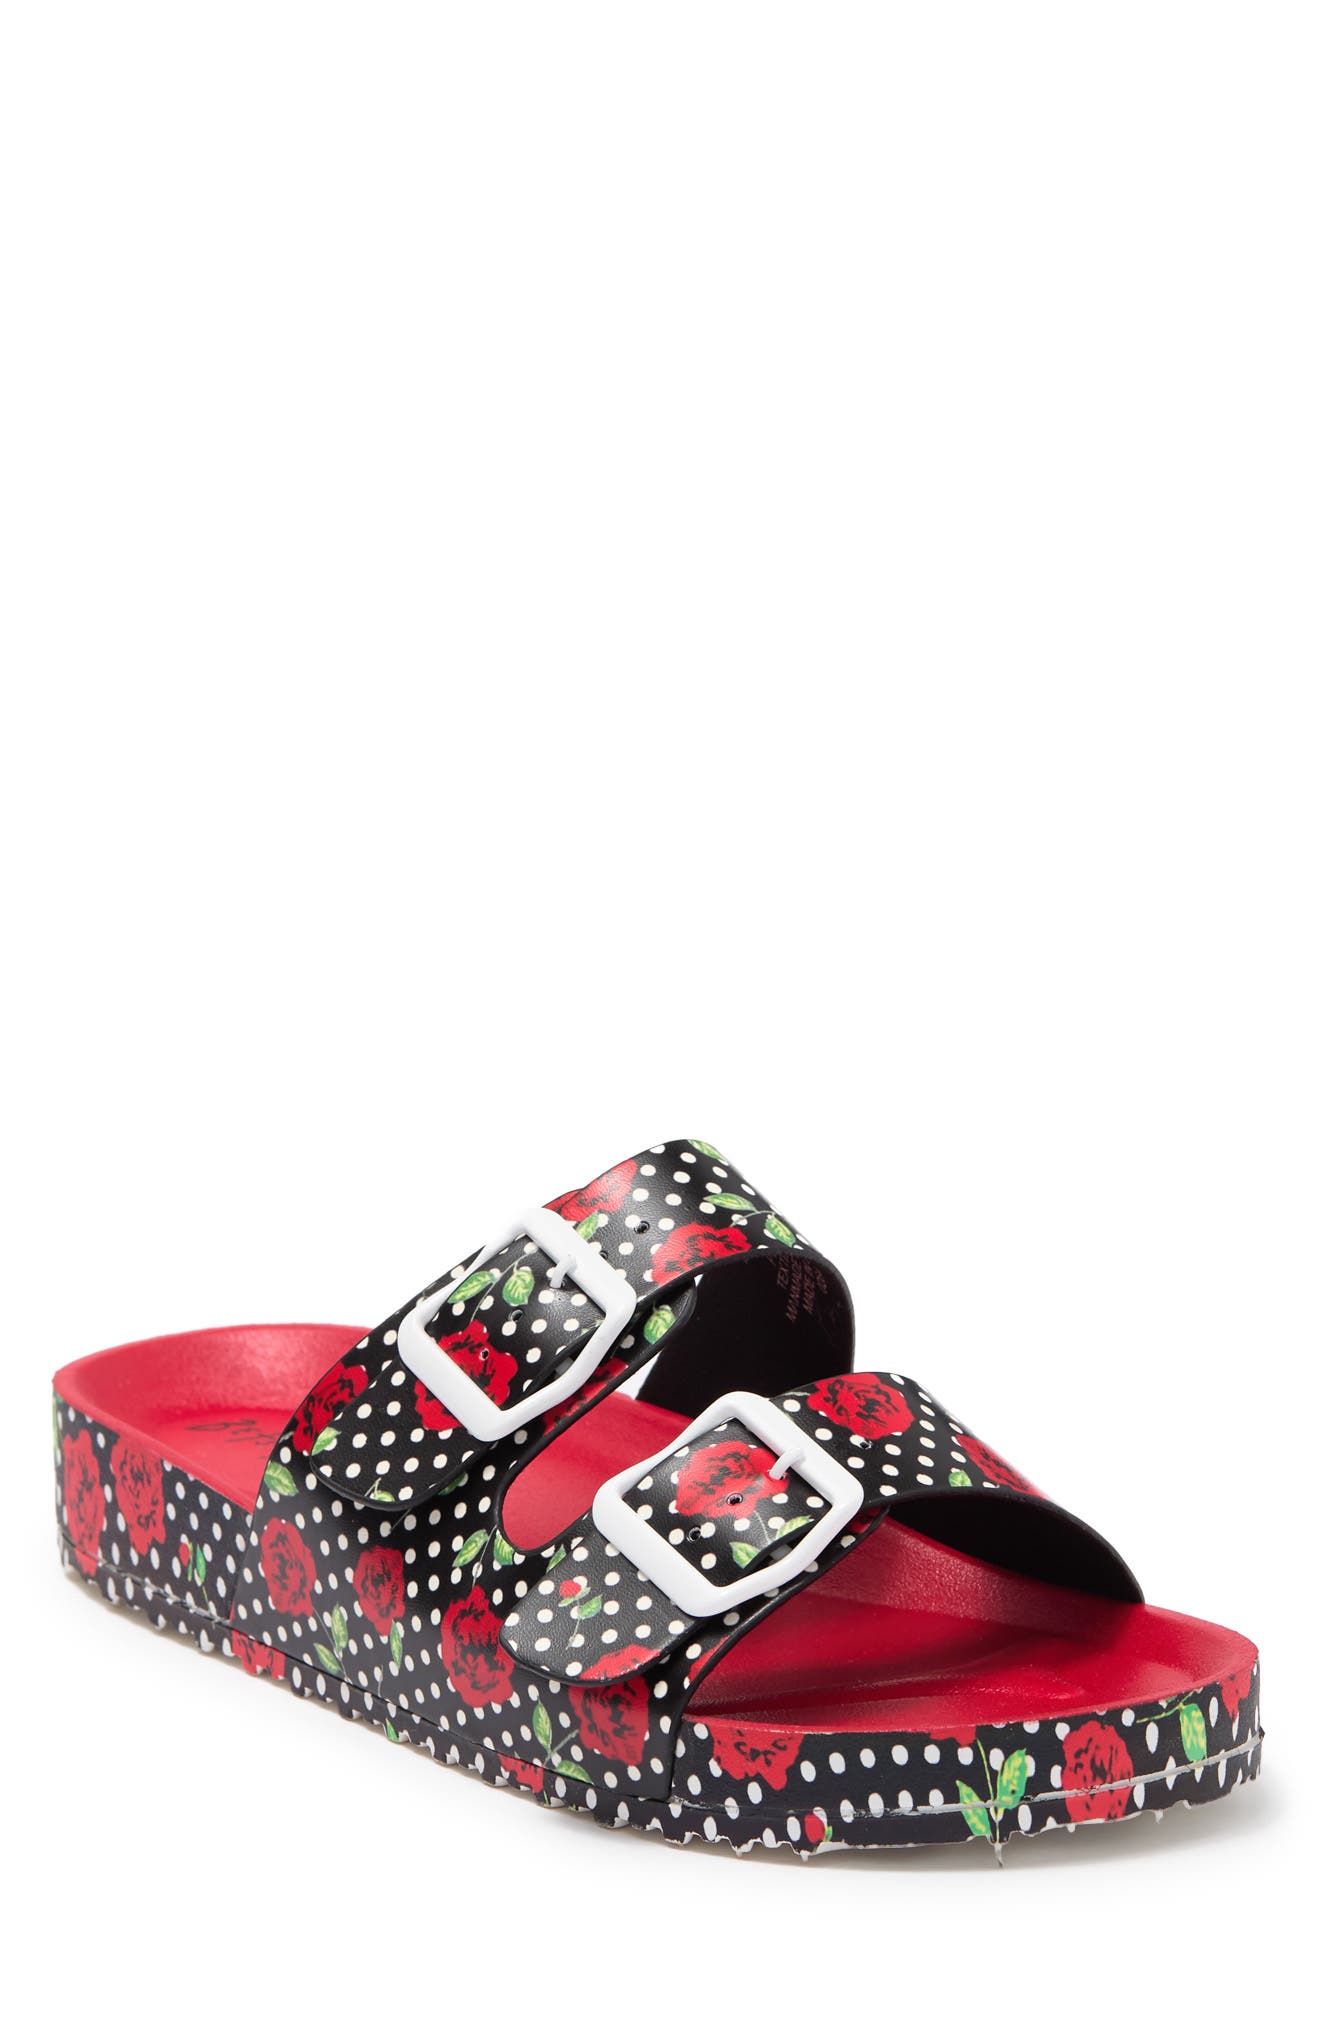 Betsey Johnson Misty Jeweled Dual Band Buckle Slide Sandals Black Multi Size 7.0 